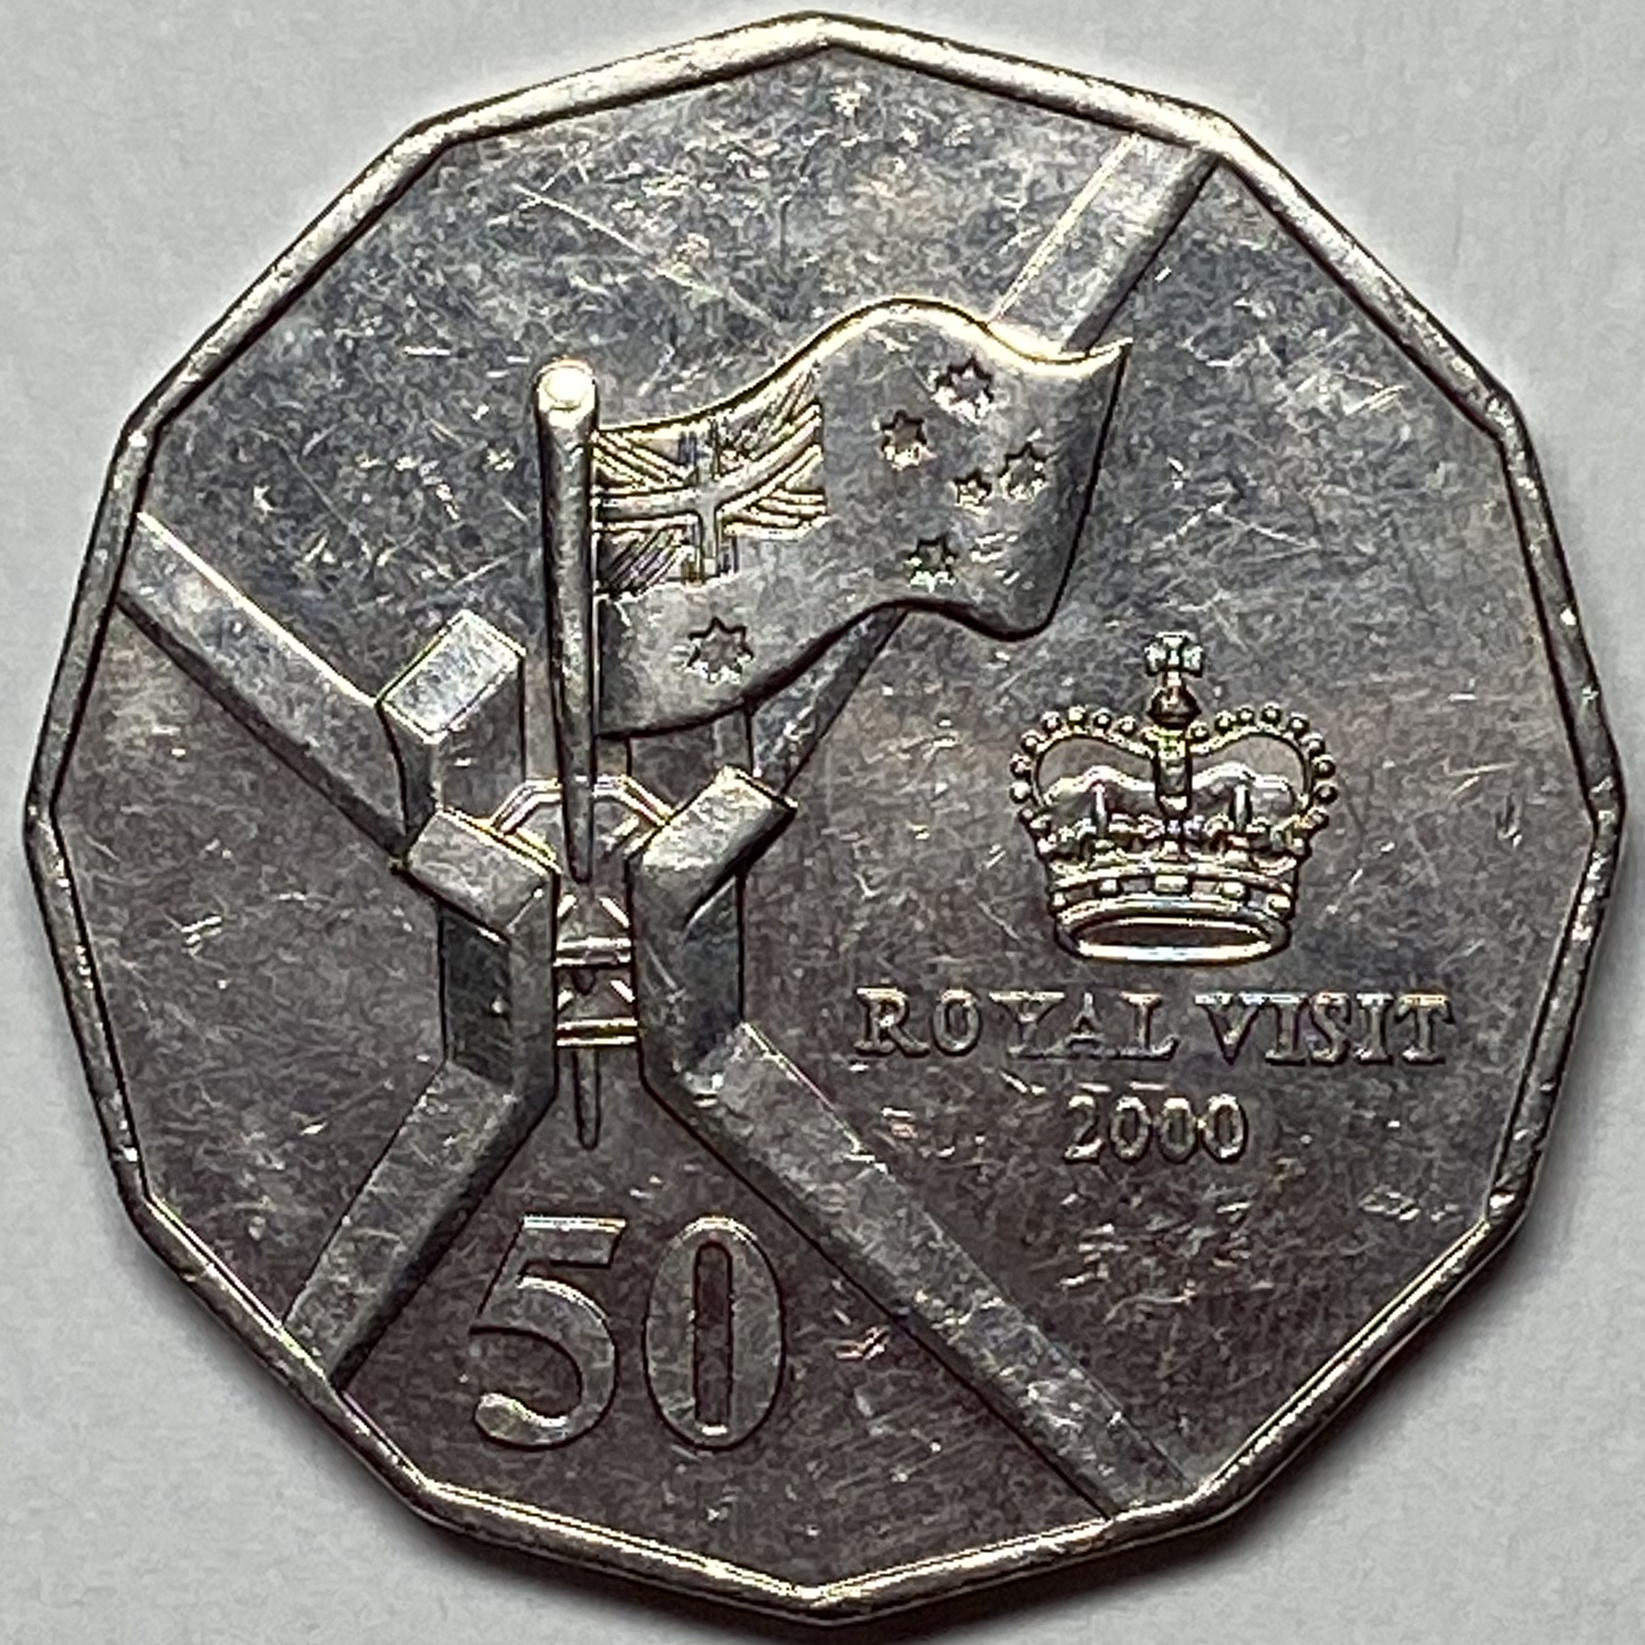 2000 royal visit 50c coin mintage